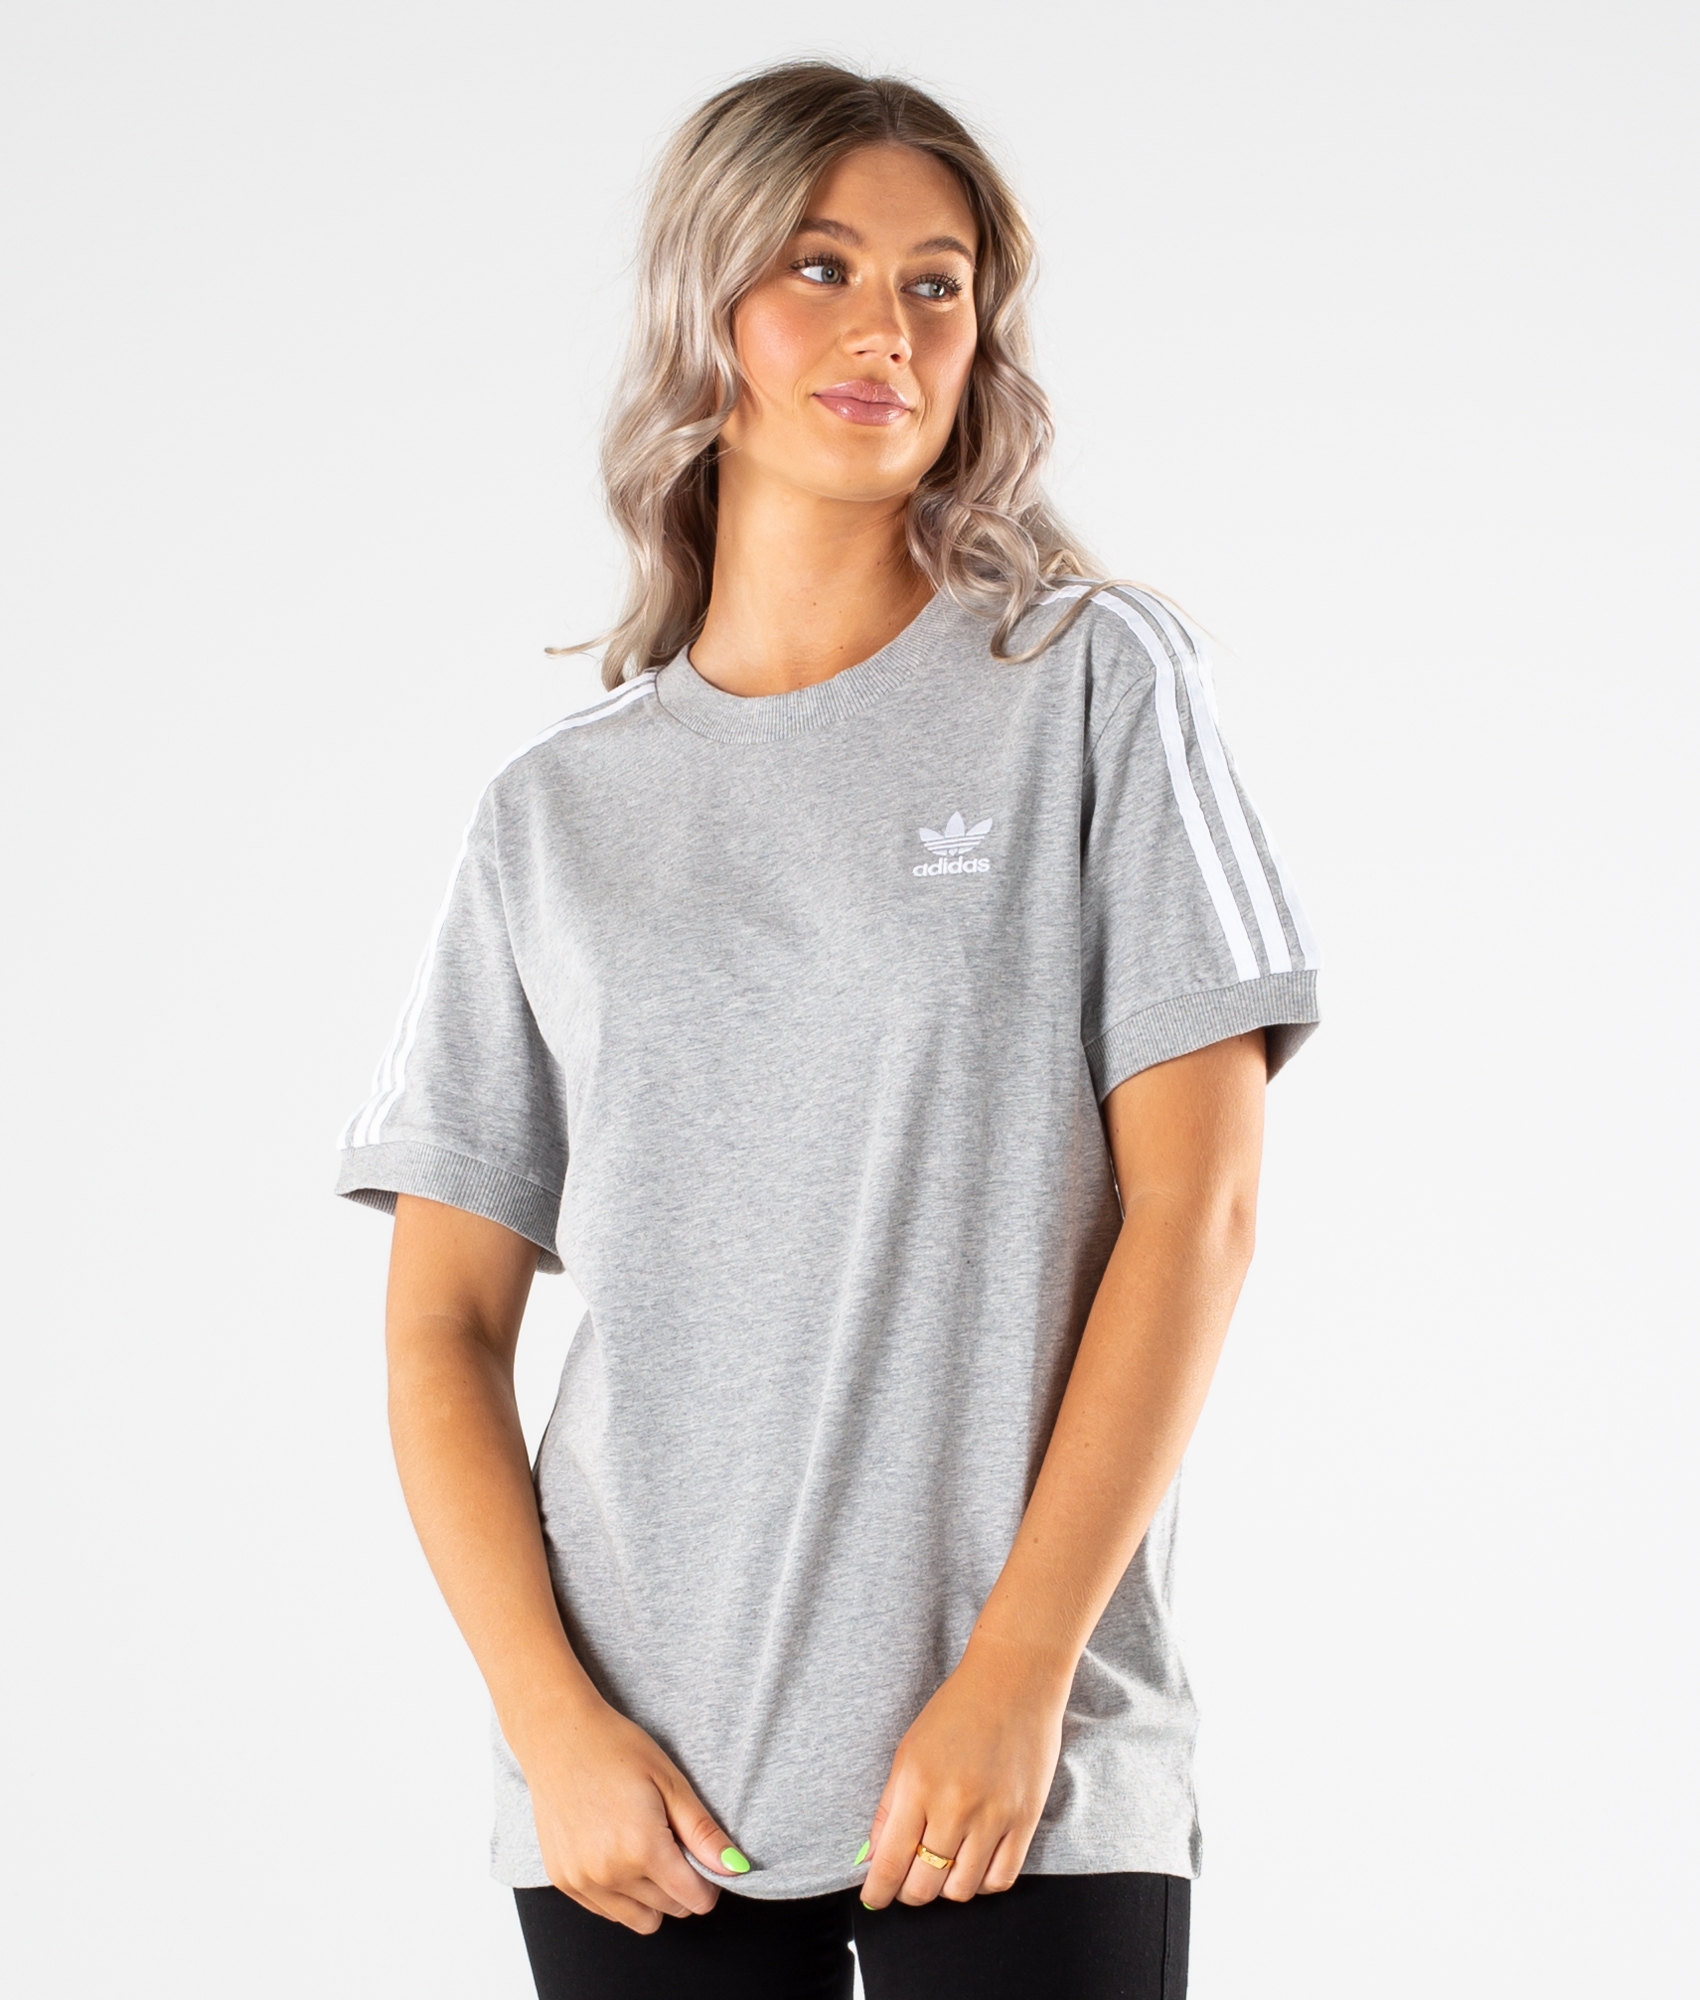 grey adidas t shirt women's